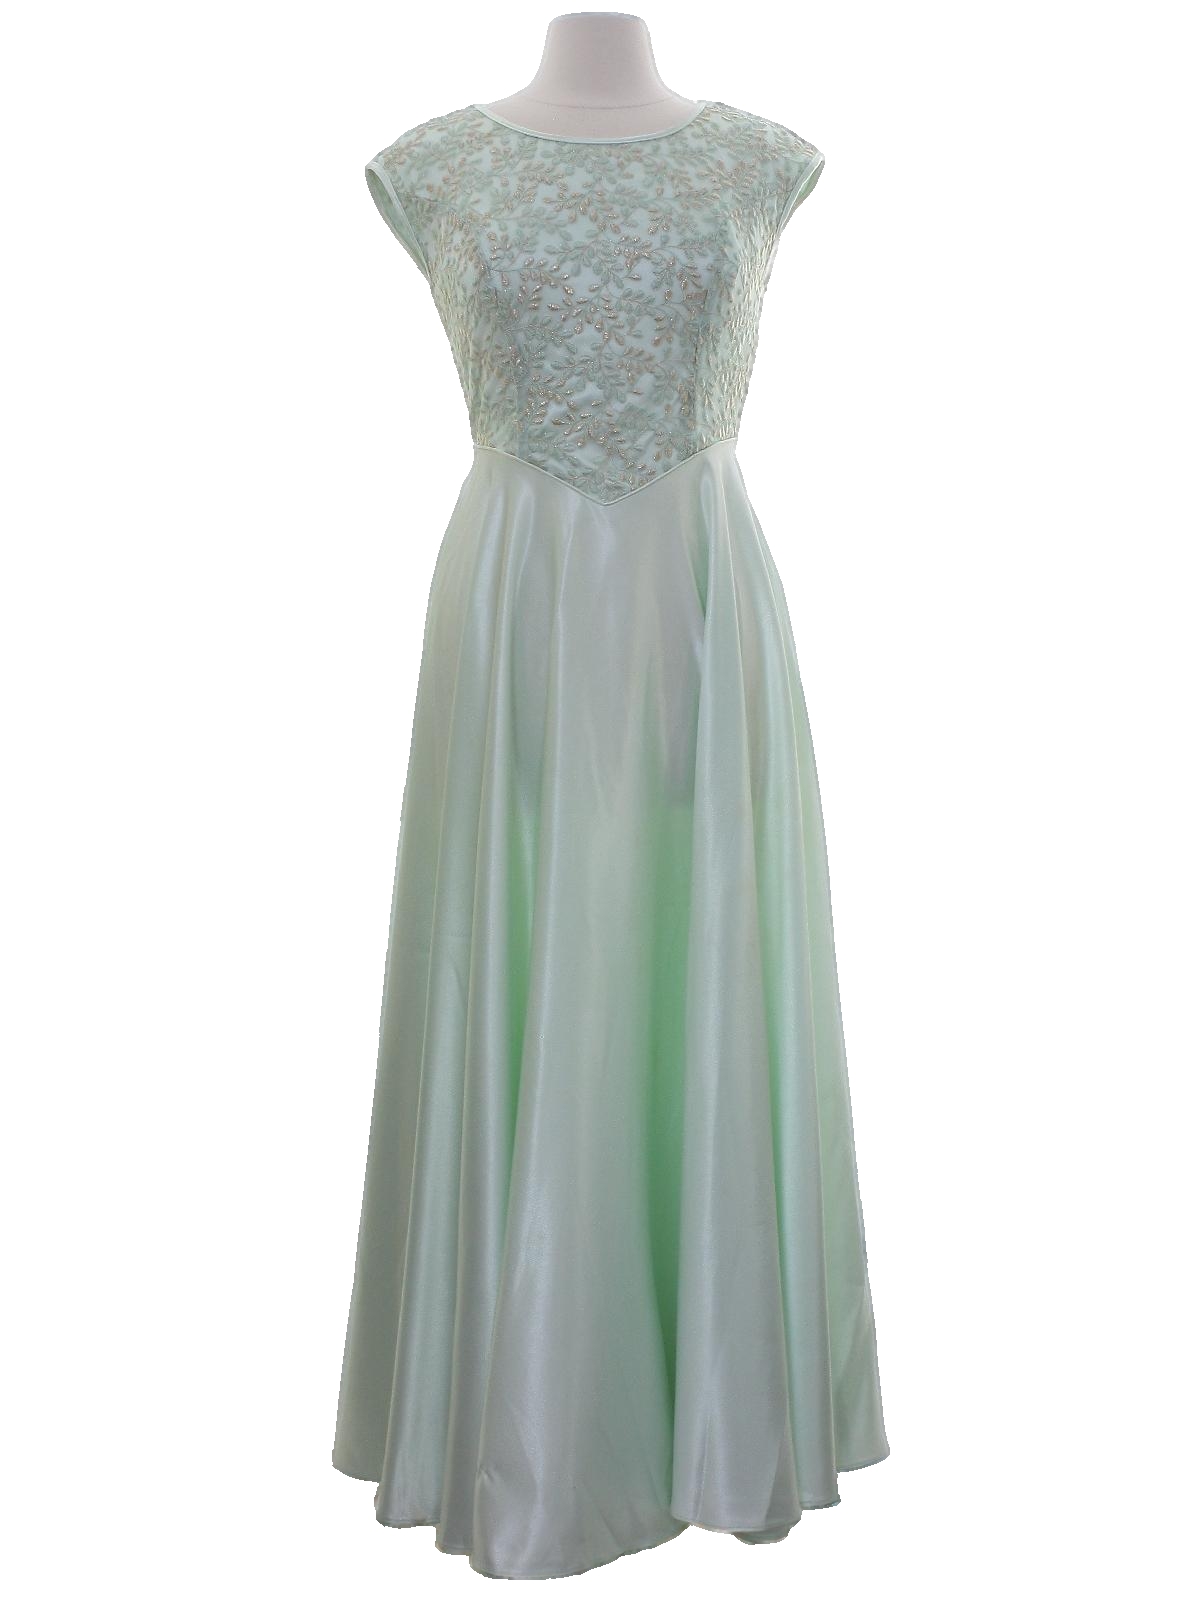 60s style prom dresses